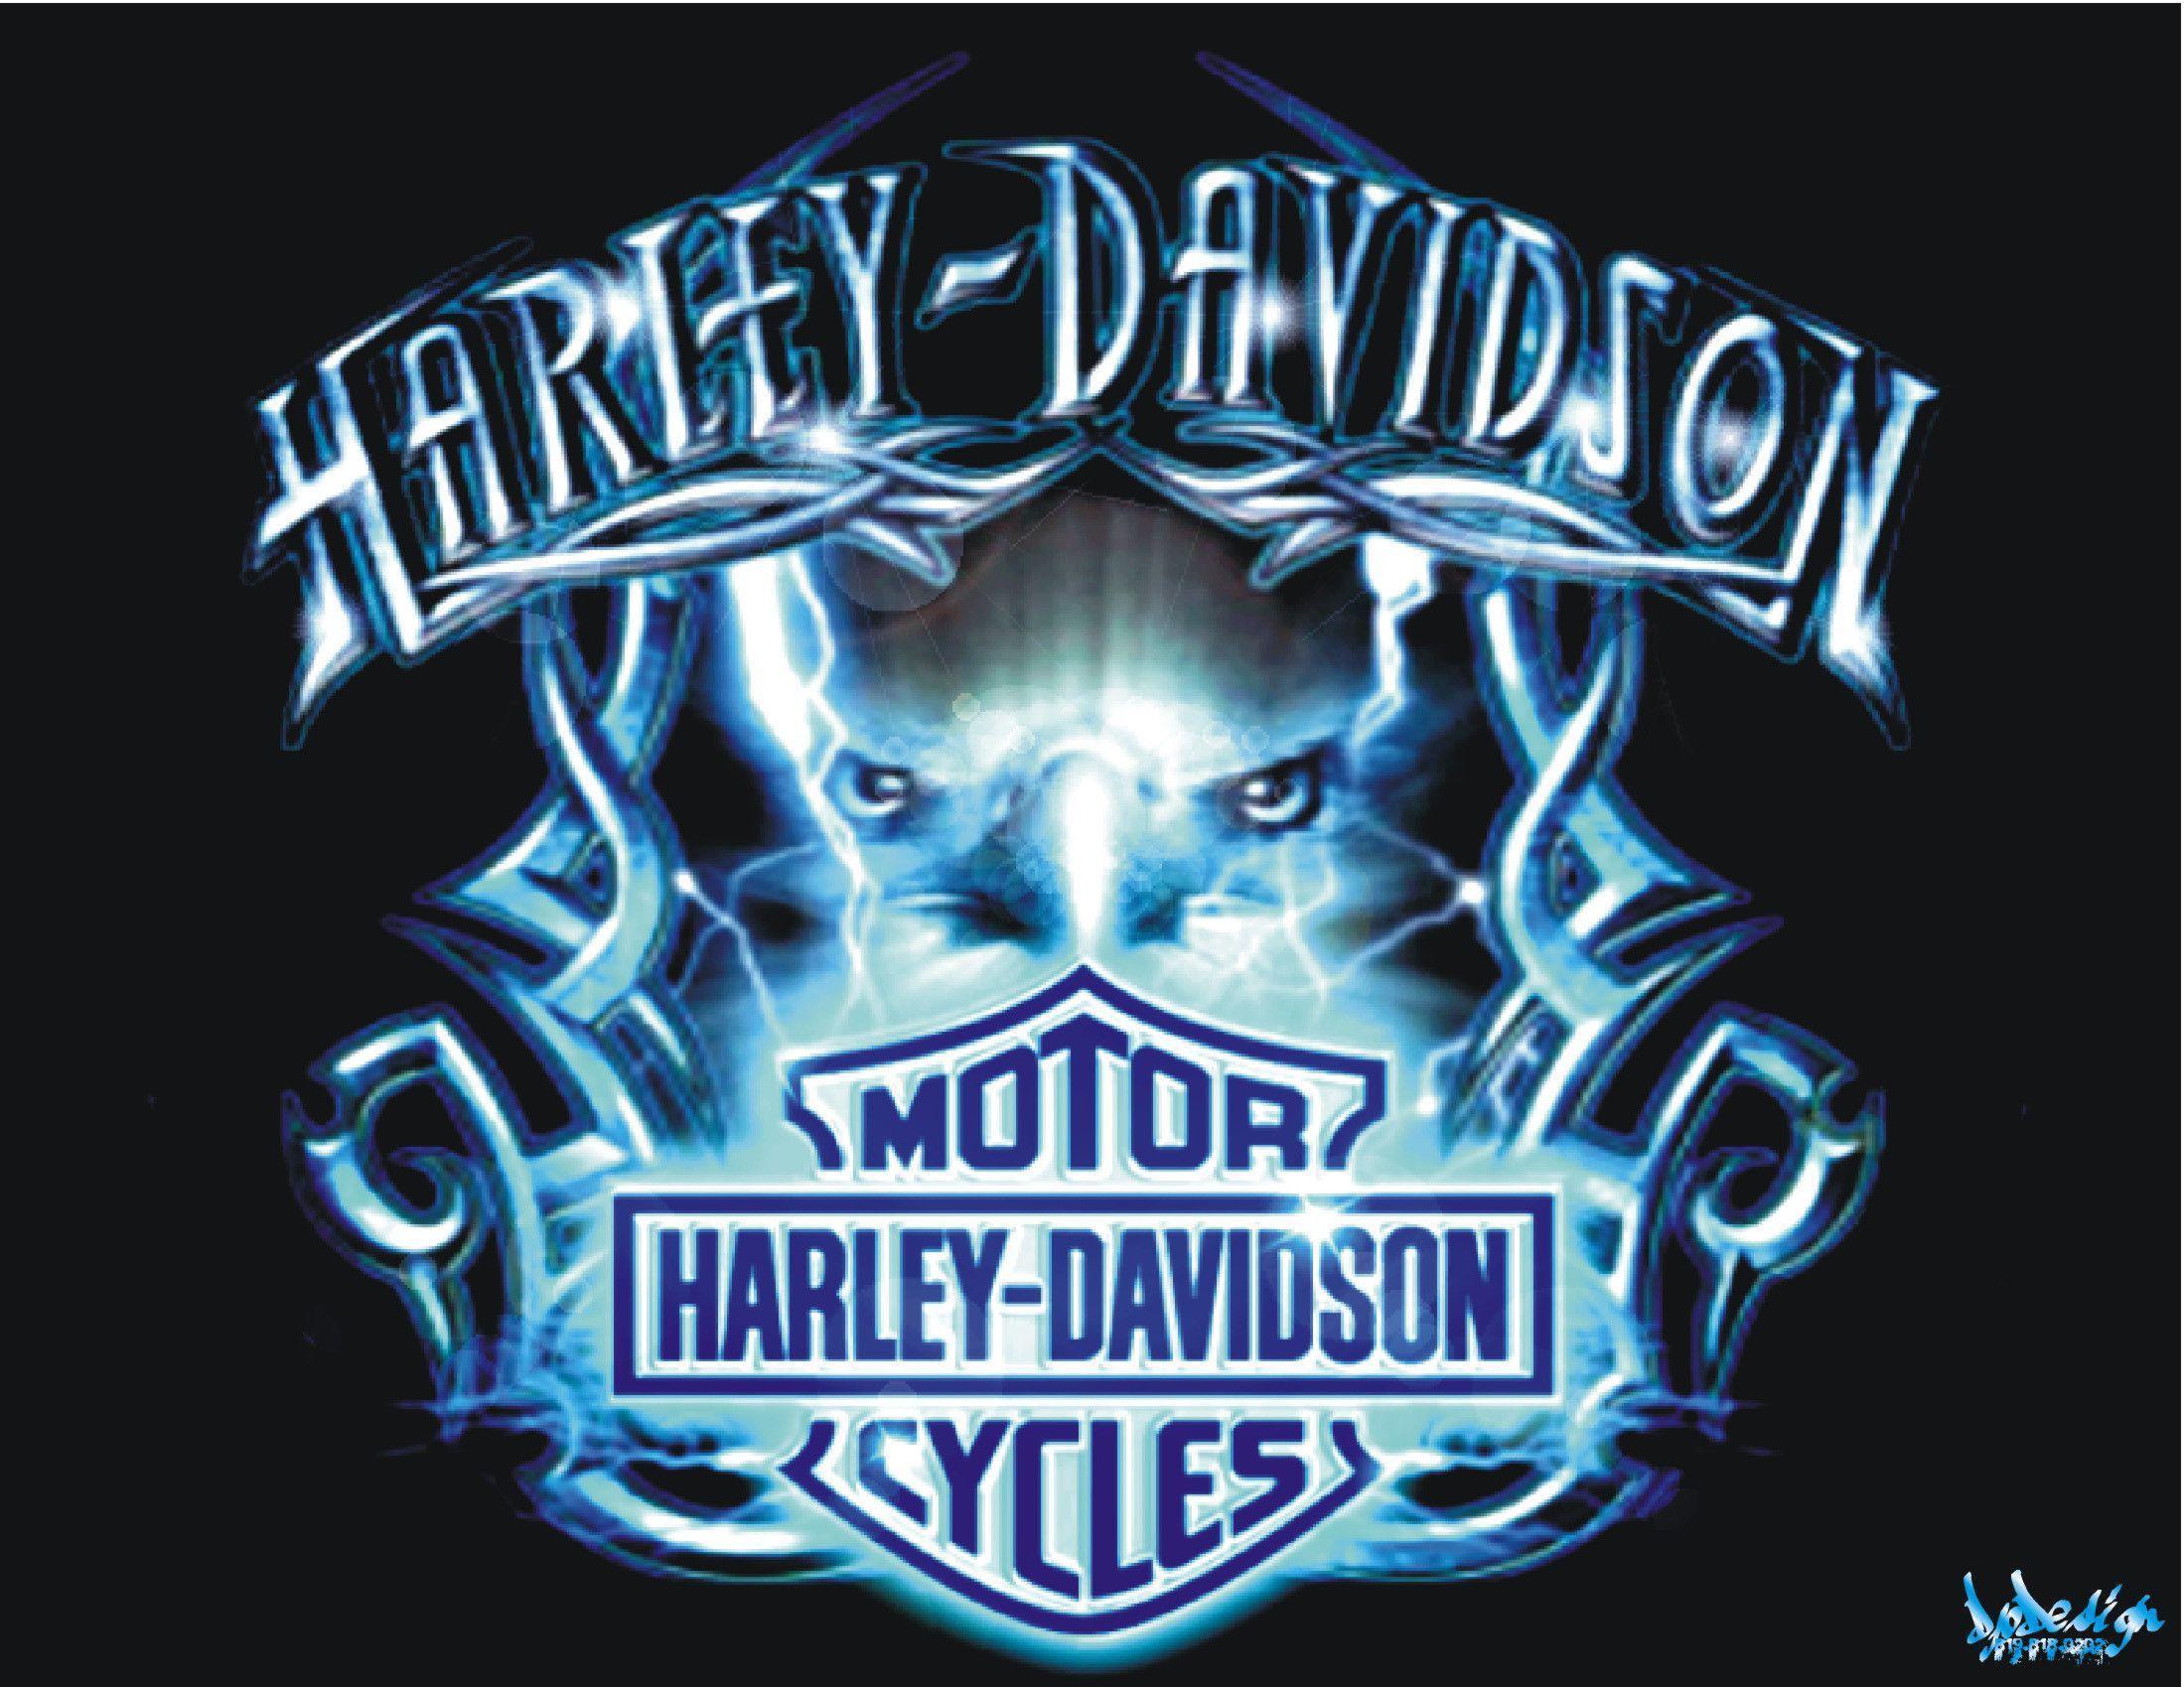 Free download Cool Harley Davidson Logo Wallpaper Images amp Pictures